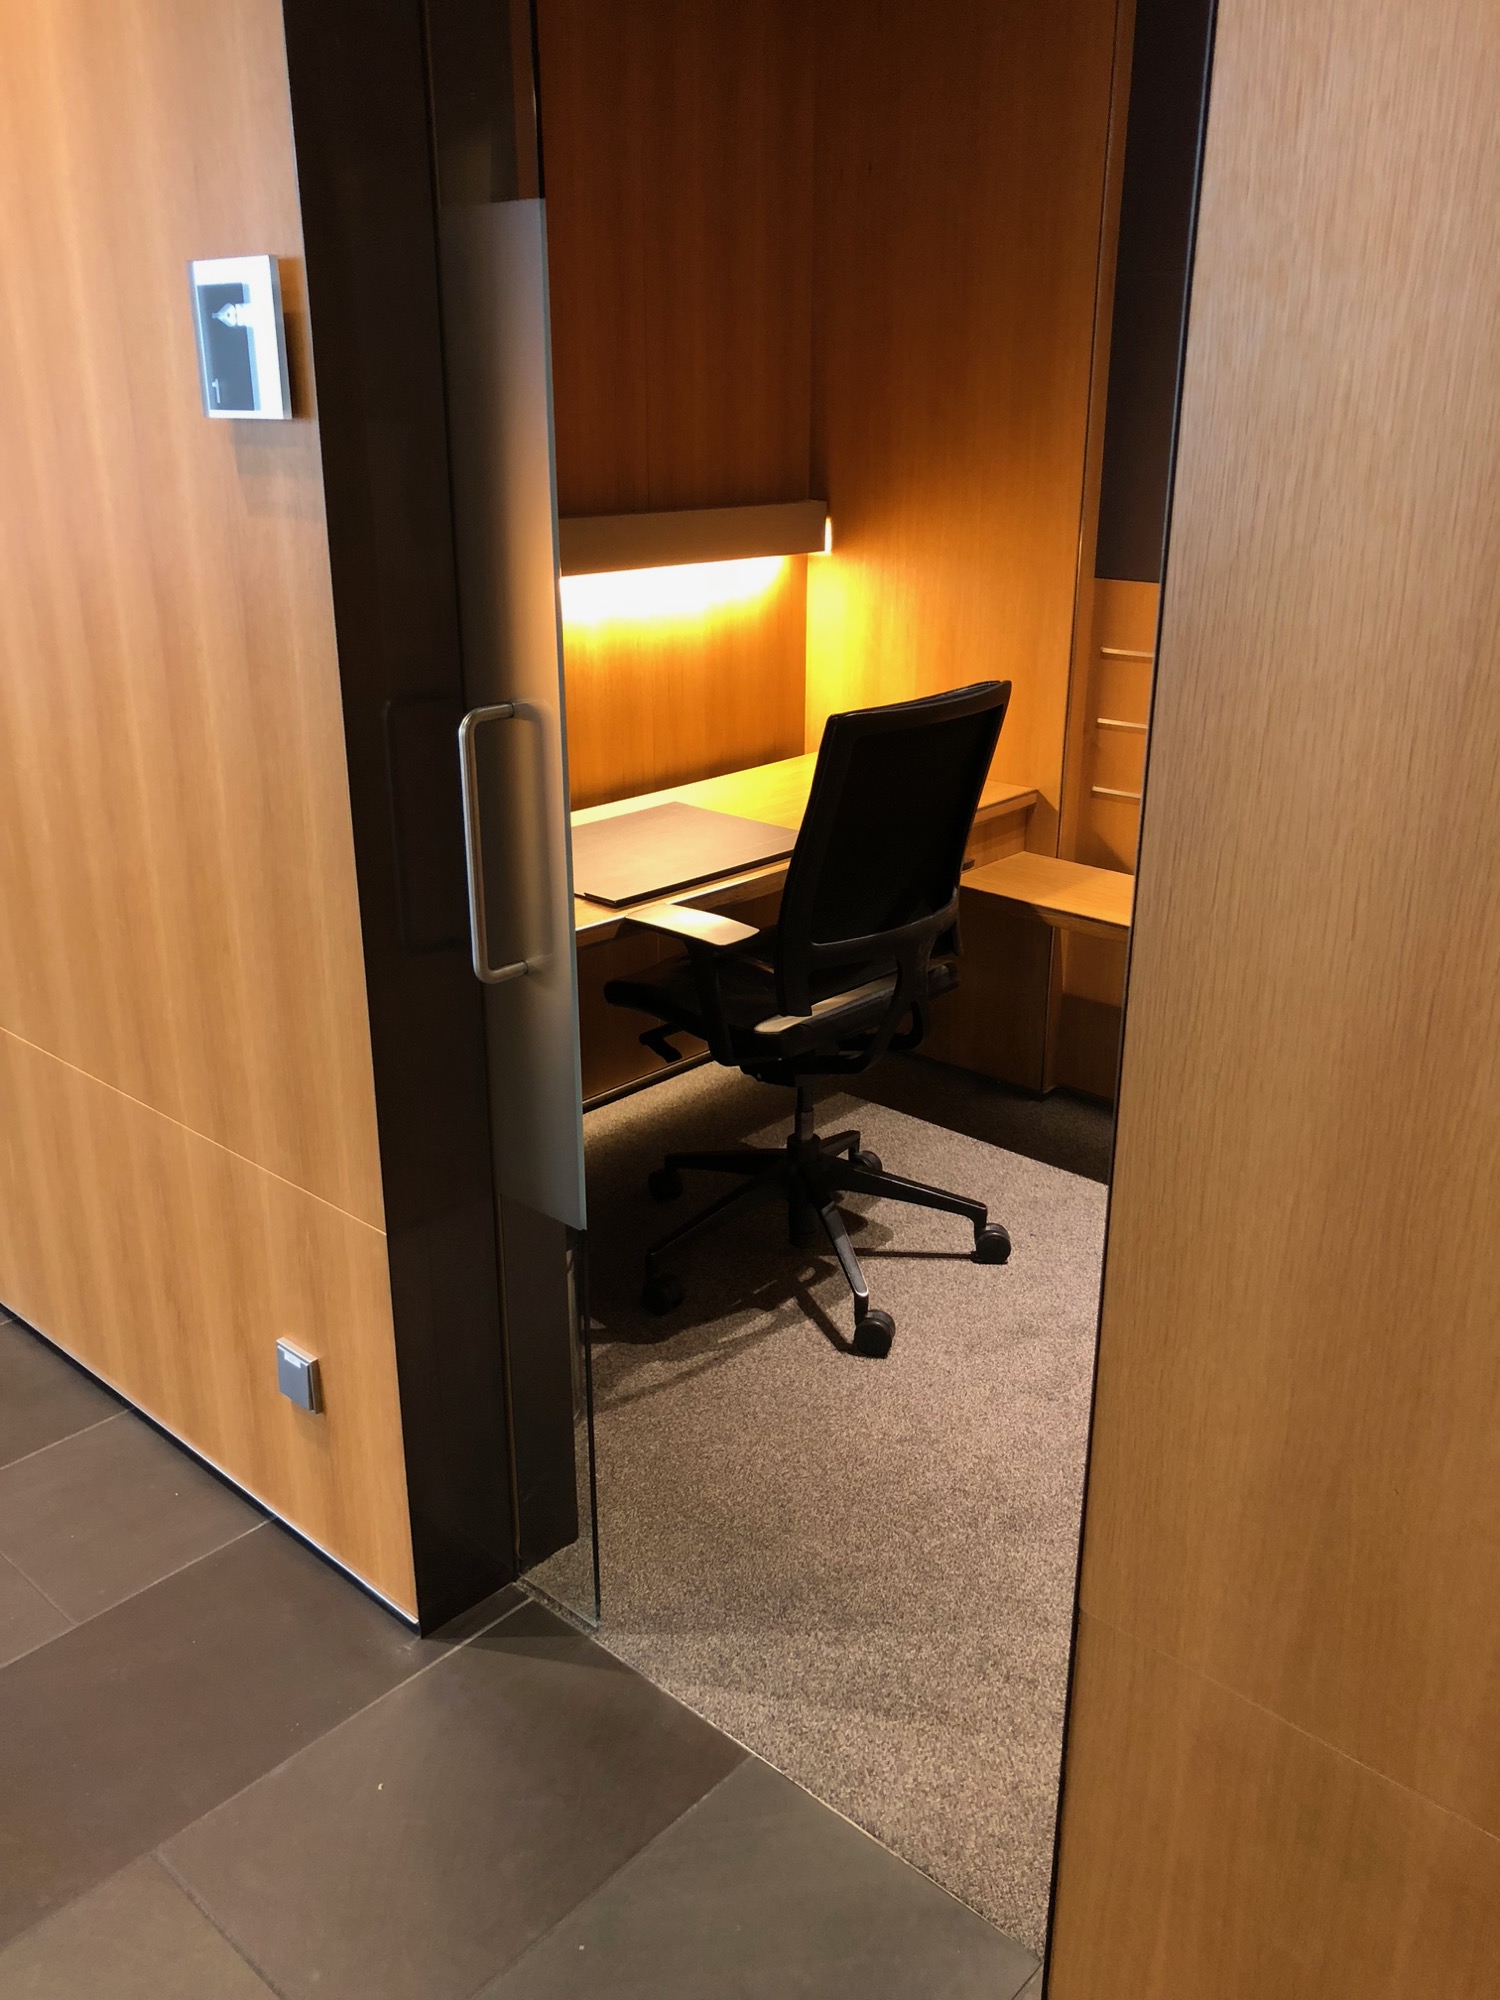 a desk in a room with a door open